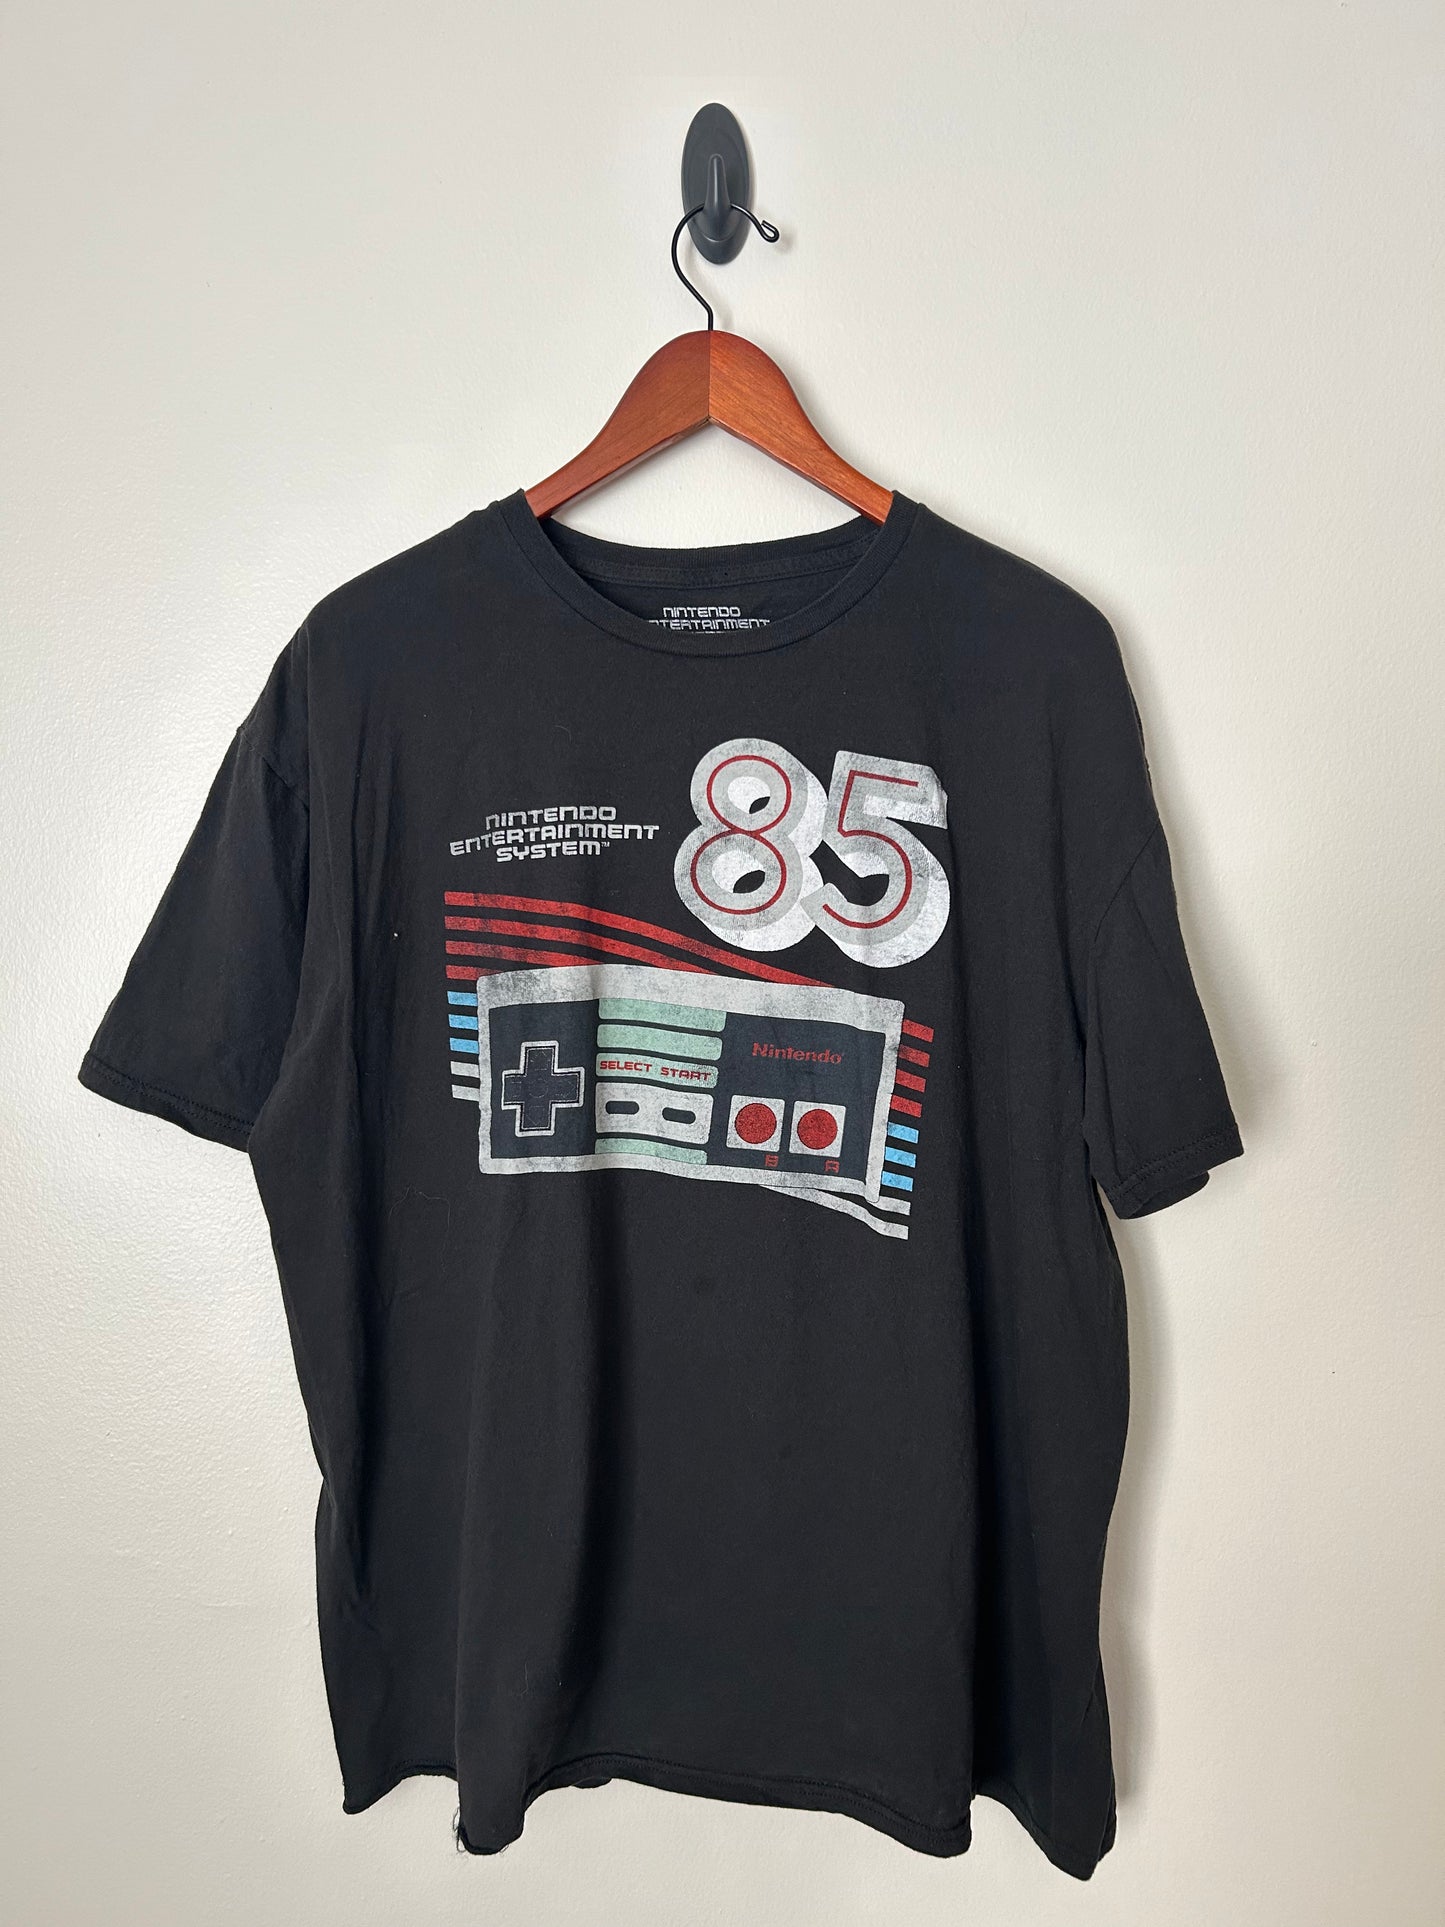 Nintendo Entertainment System '85 T-Shirt - XXL